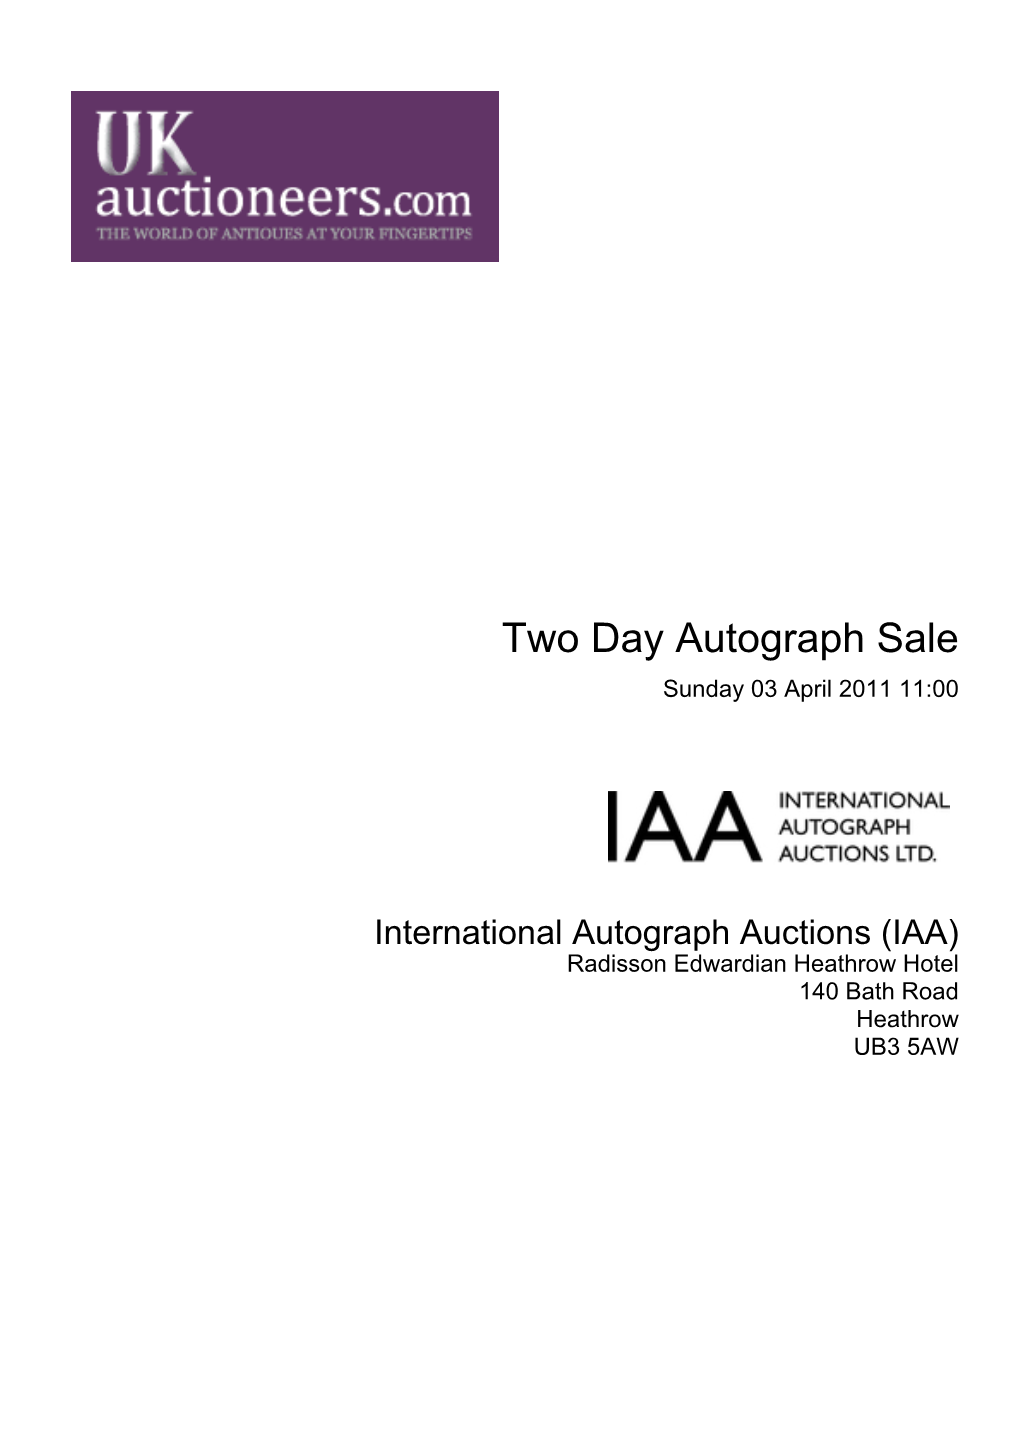 Two Day Autograph Sale Sunday 03 April 2011 11:00